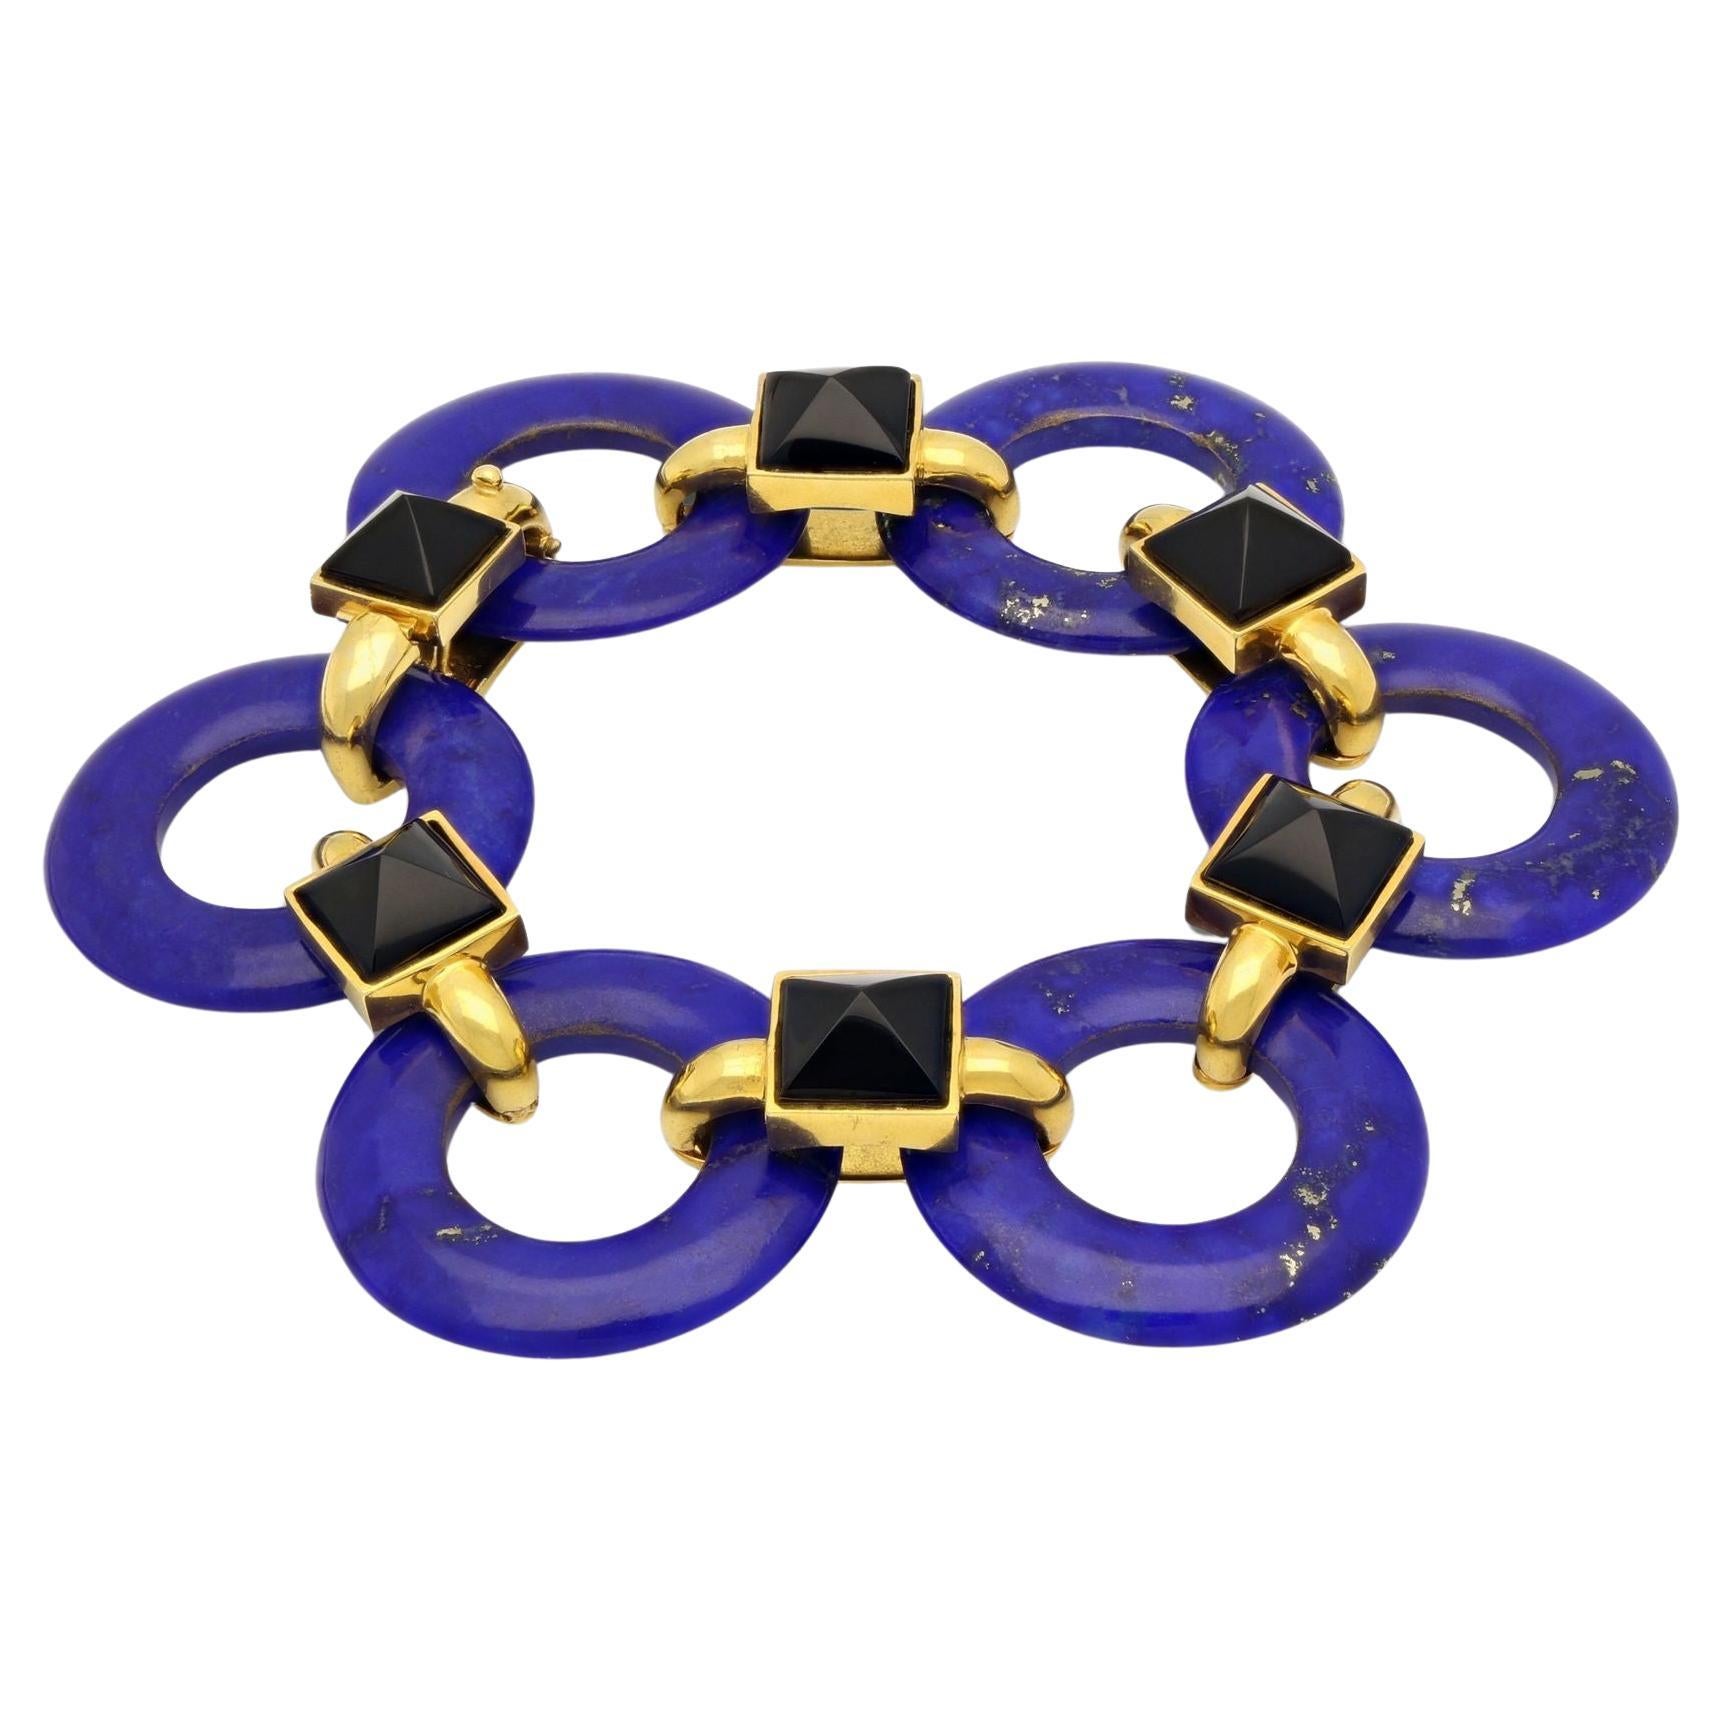 Cartier 18ct Gold, Lapis Lazuli and Black Onyx Bracelet Designed by Aldo Cipullo